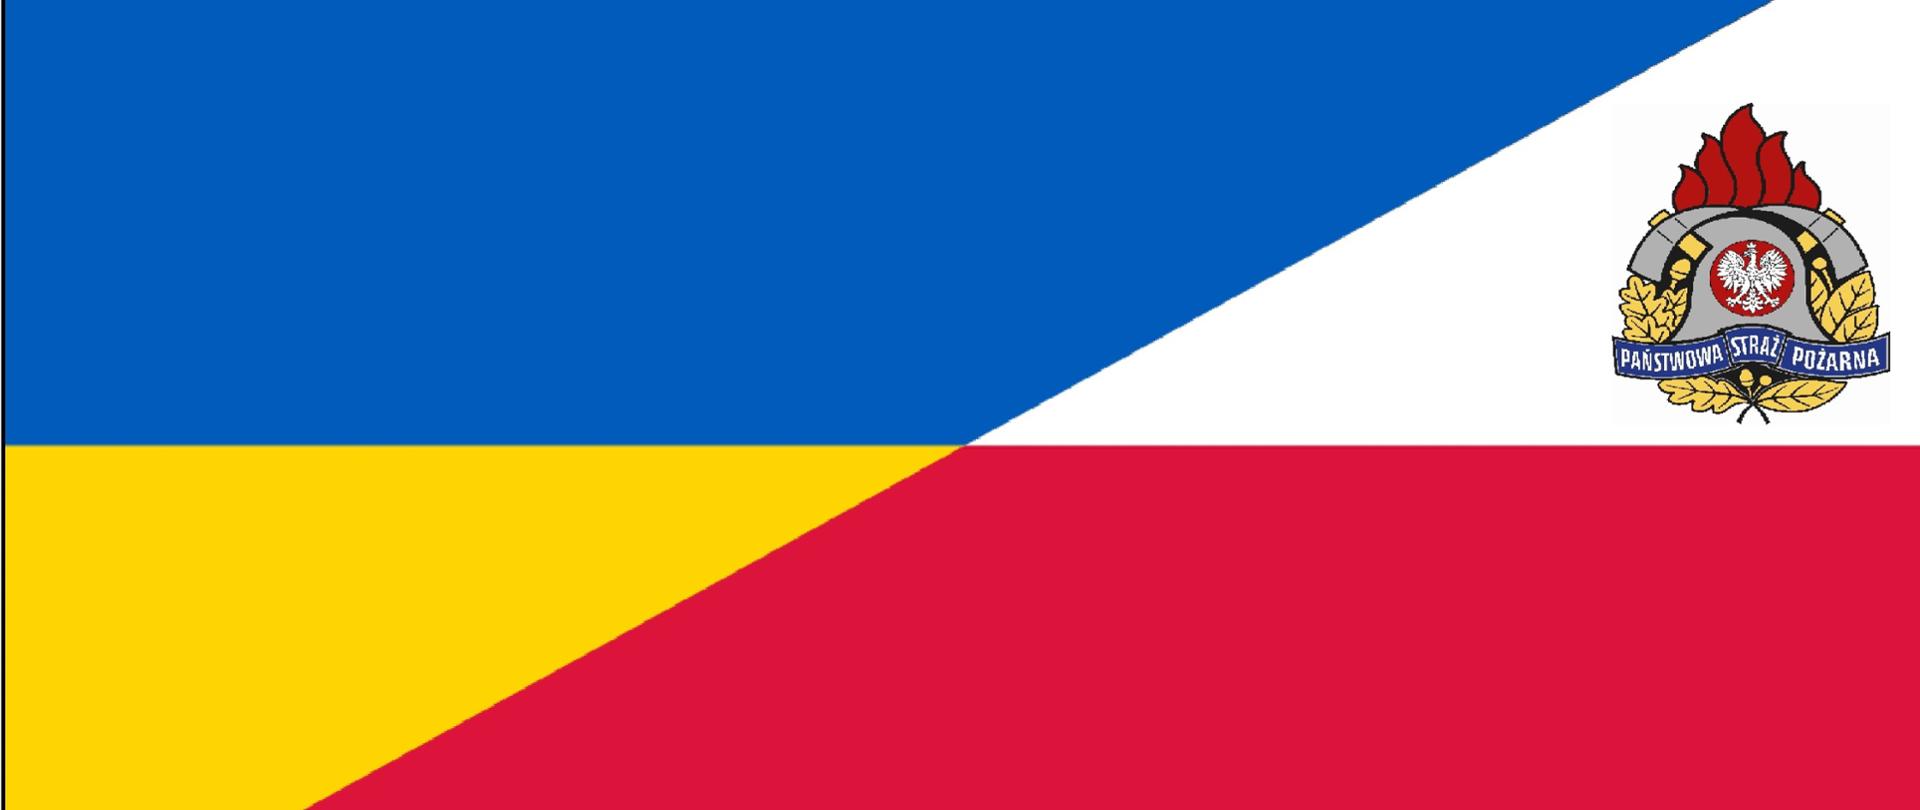 Flaga Ukrainy i Polski. Logo PSP po prawej stronie.